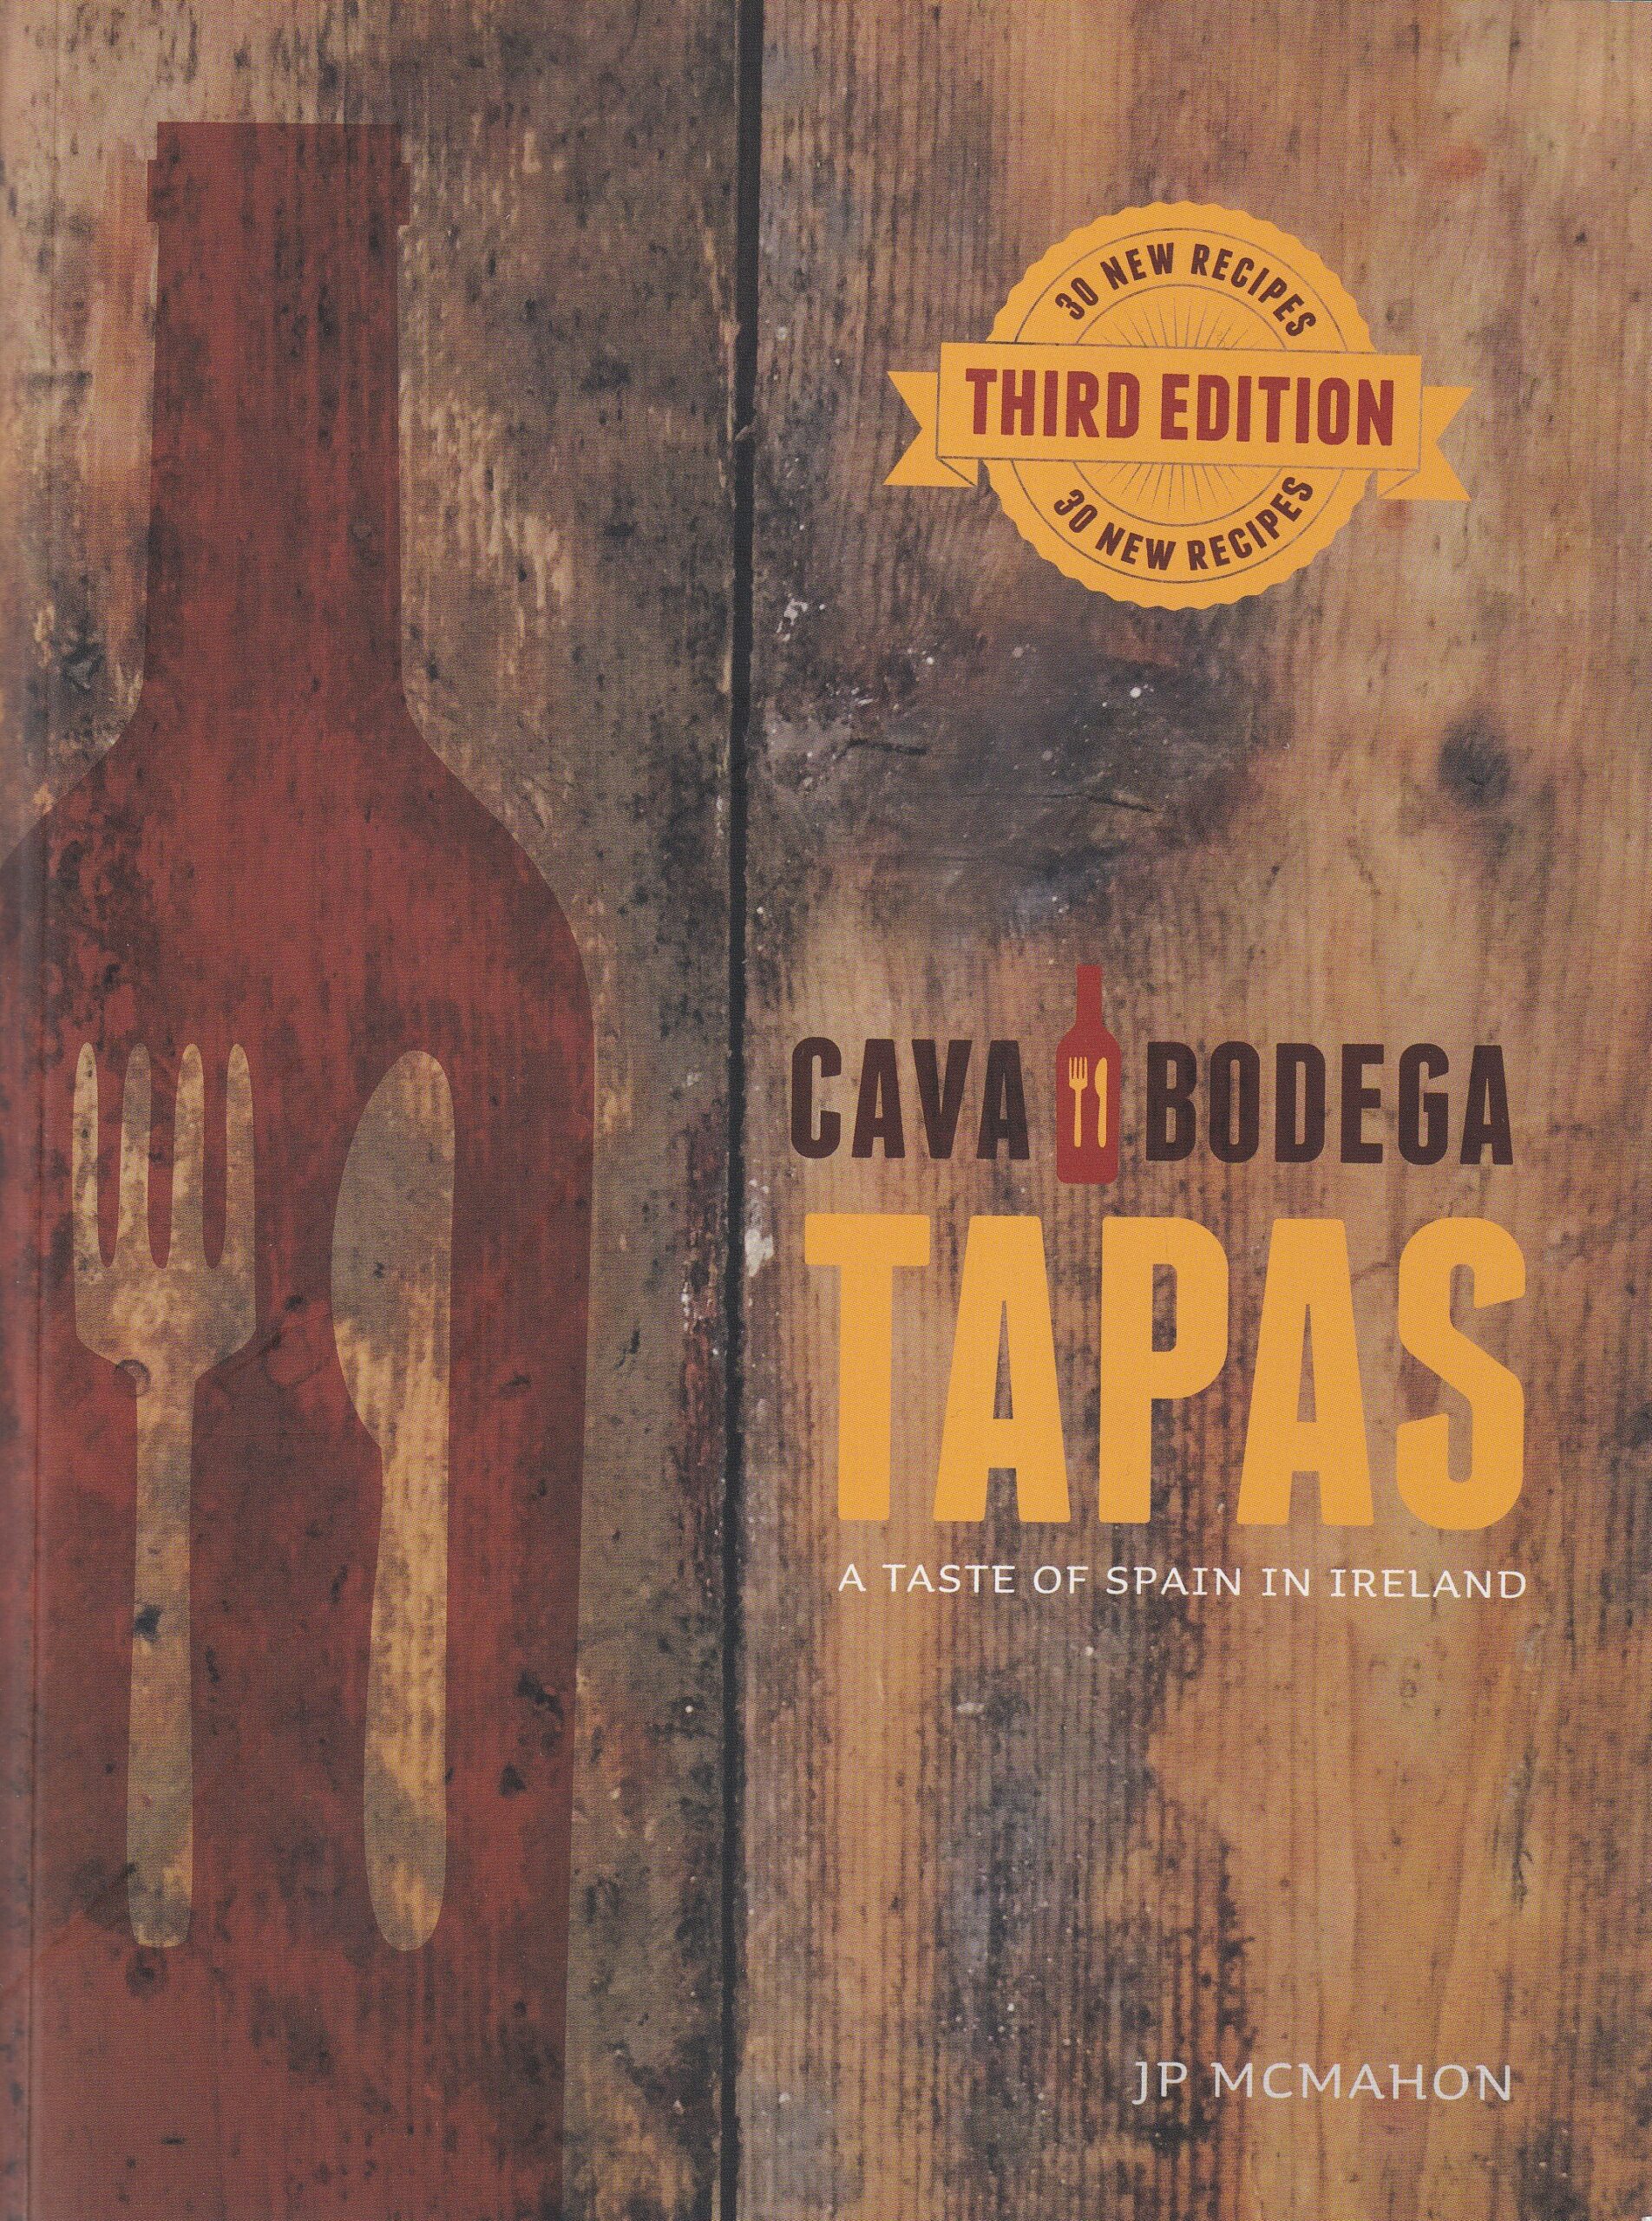 Cava Bodega Tapas: A Taste of Spain in Ireland by JP McMahon